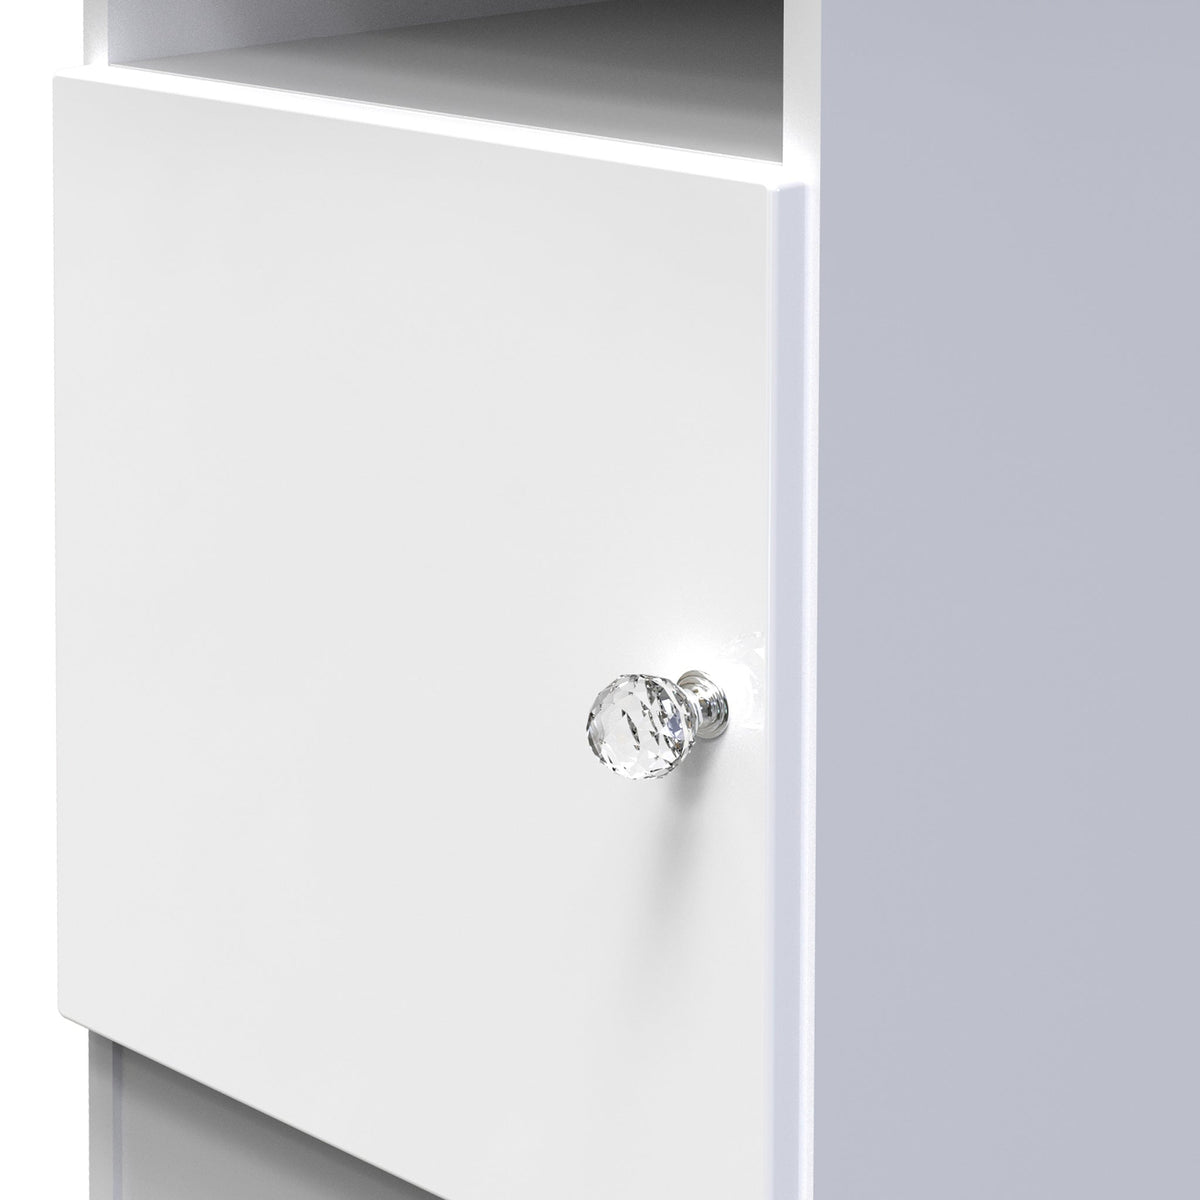 Aria White gloss 1 door storage cabinet close up